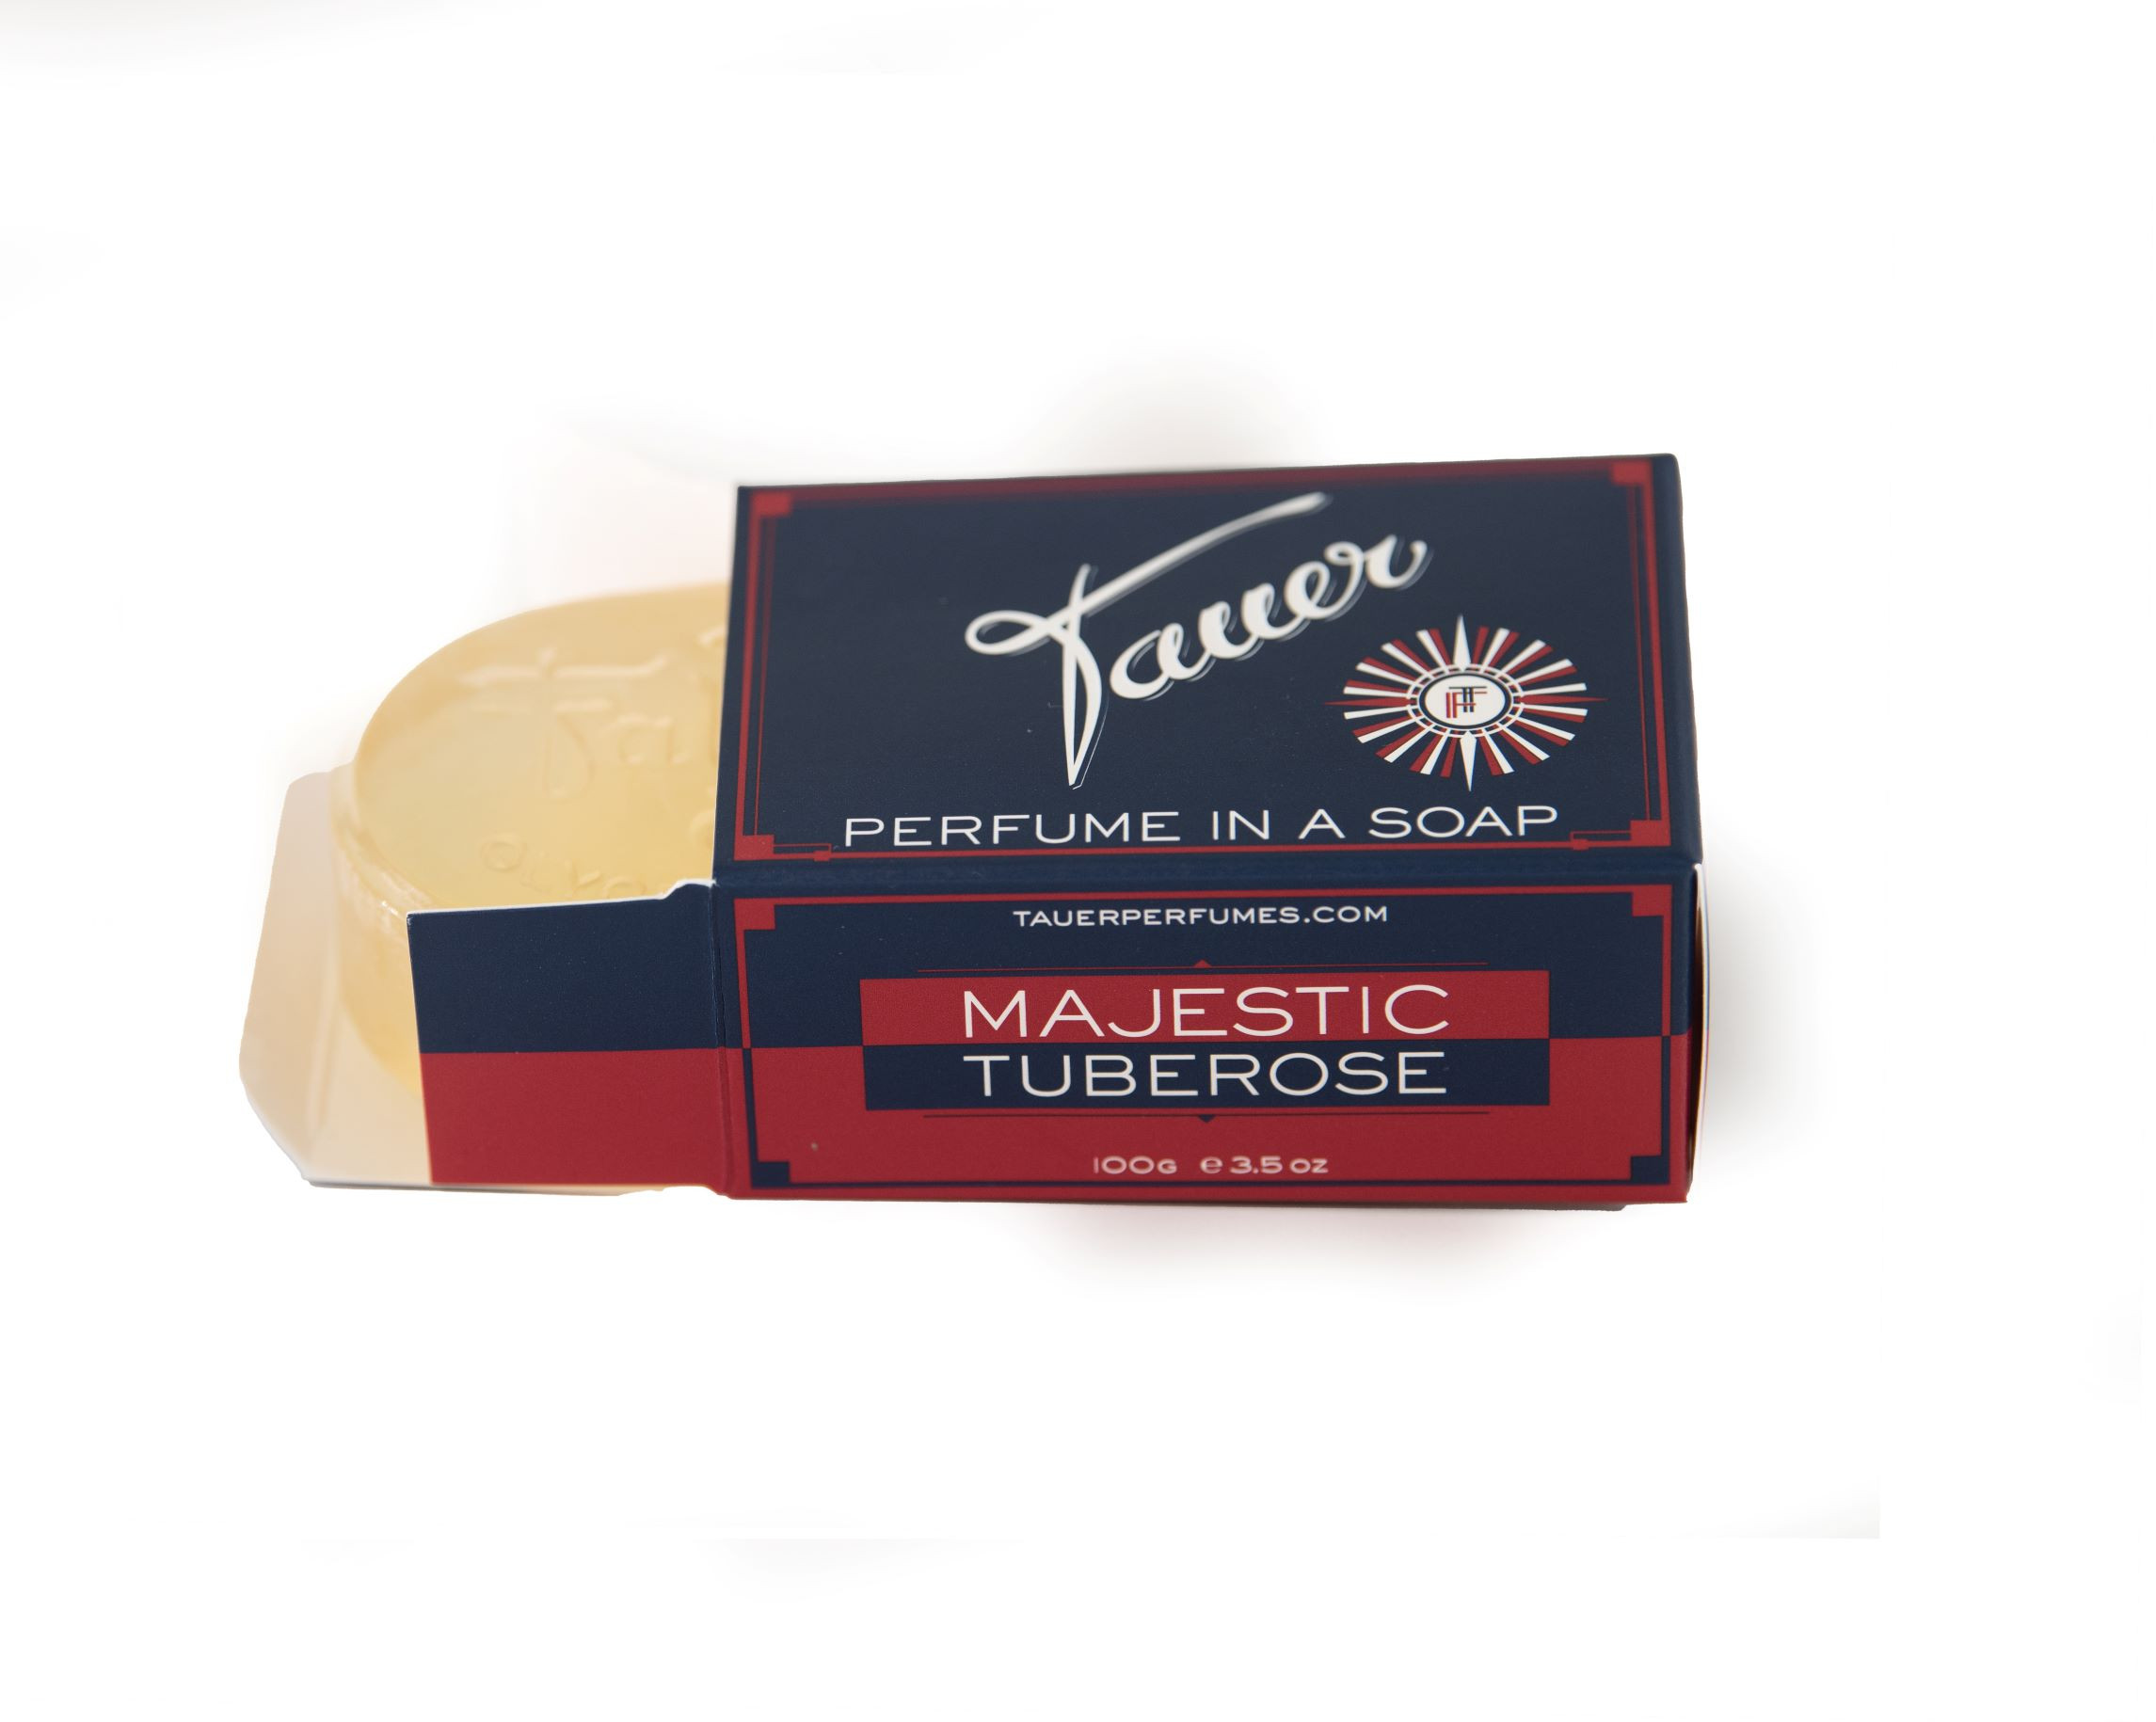 PERFUME IN A SOAP: Majestic Tuberose